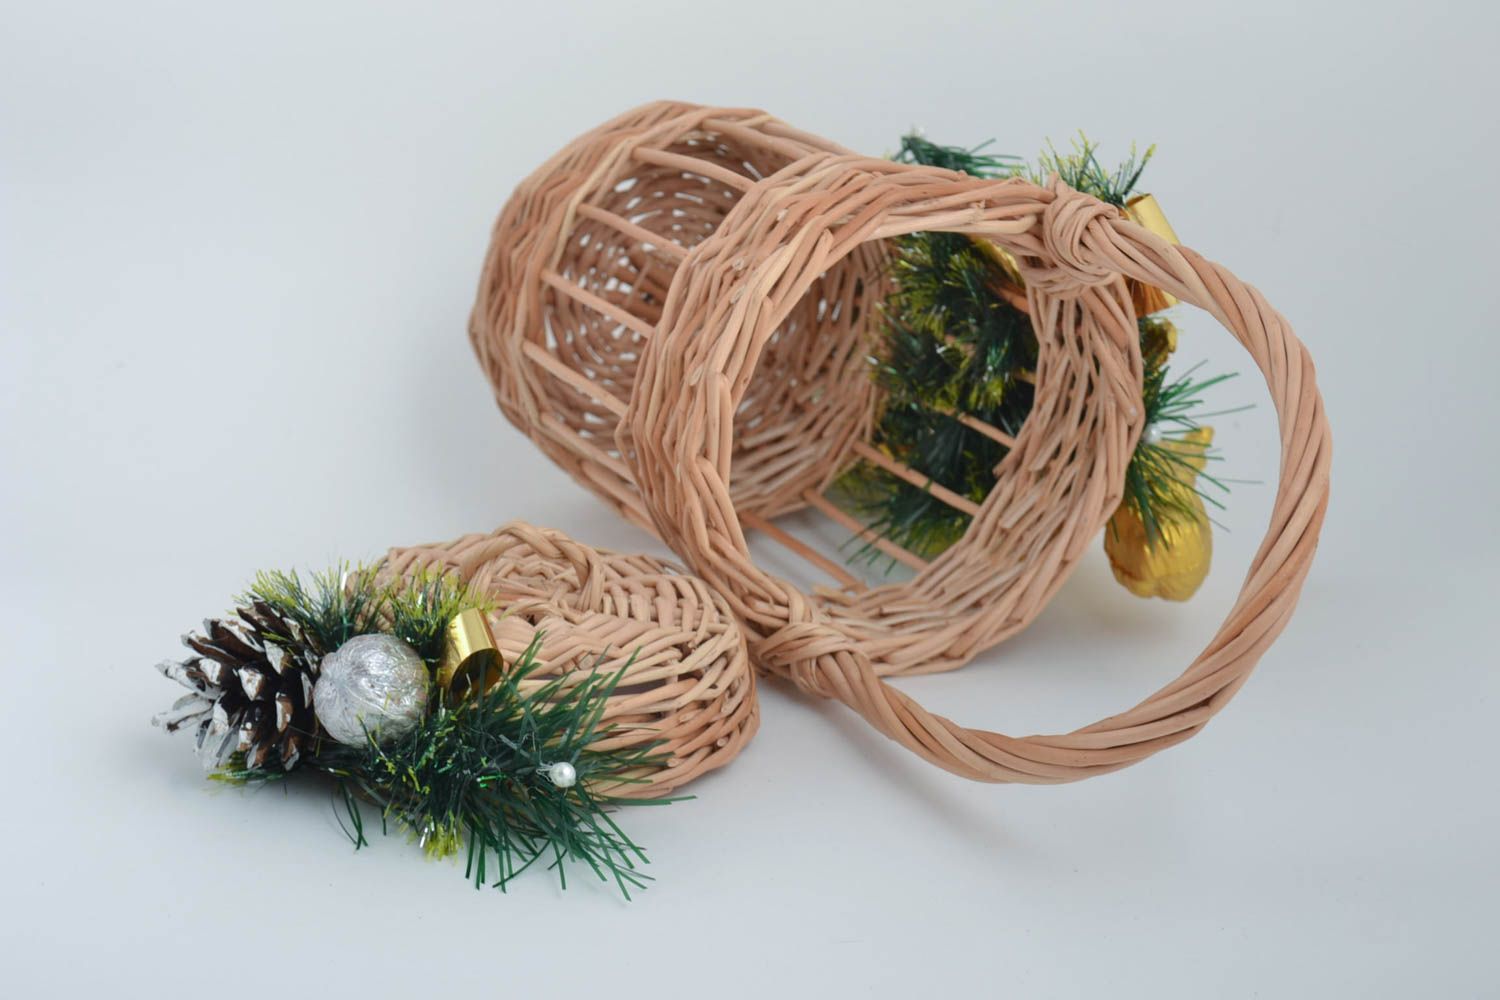 Beautiful handmade woven basket Easter basket ideas unusual Easter accessories photo 4